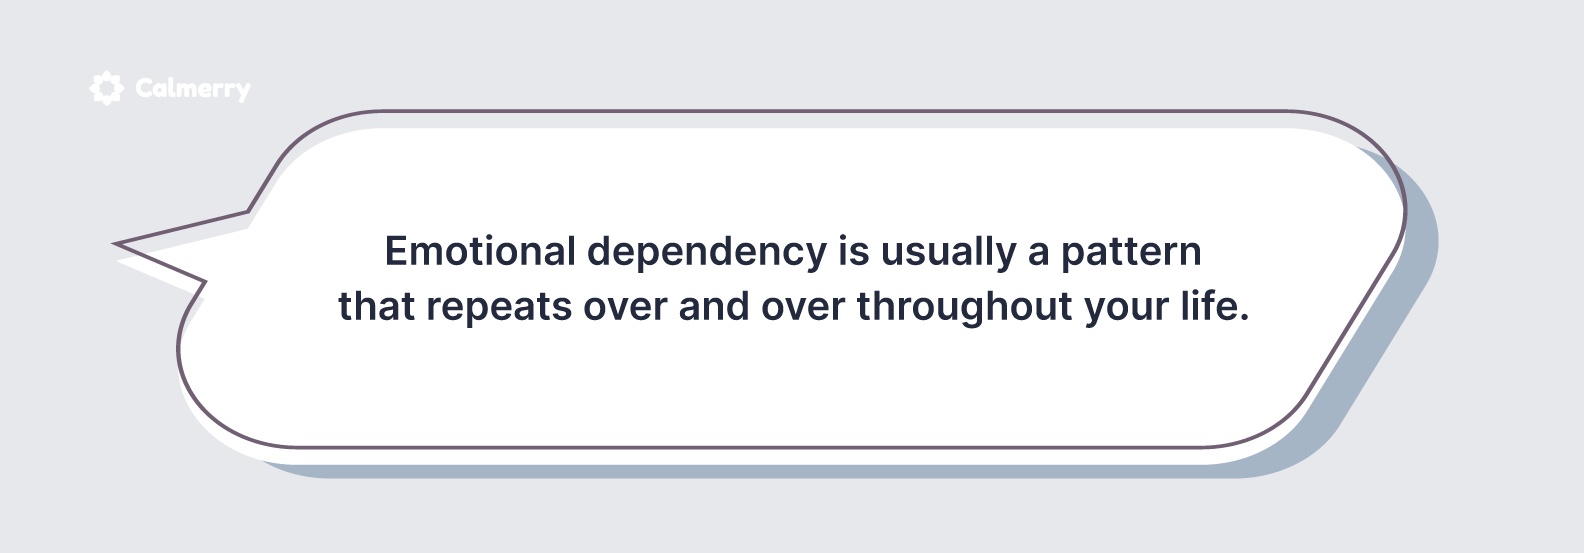 emotional dependency pattern